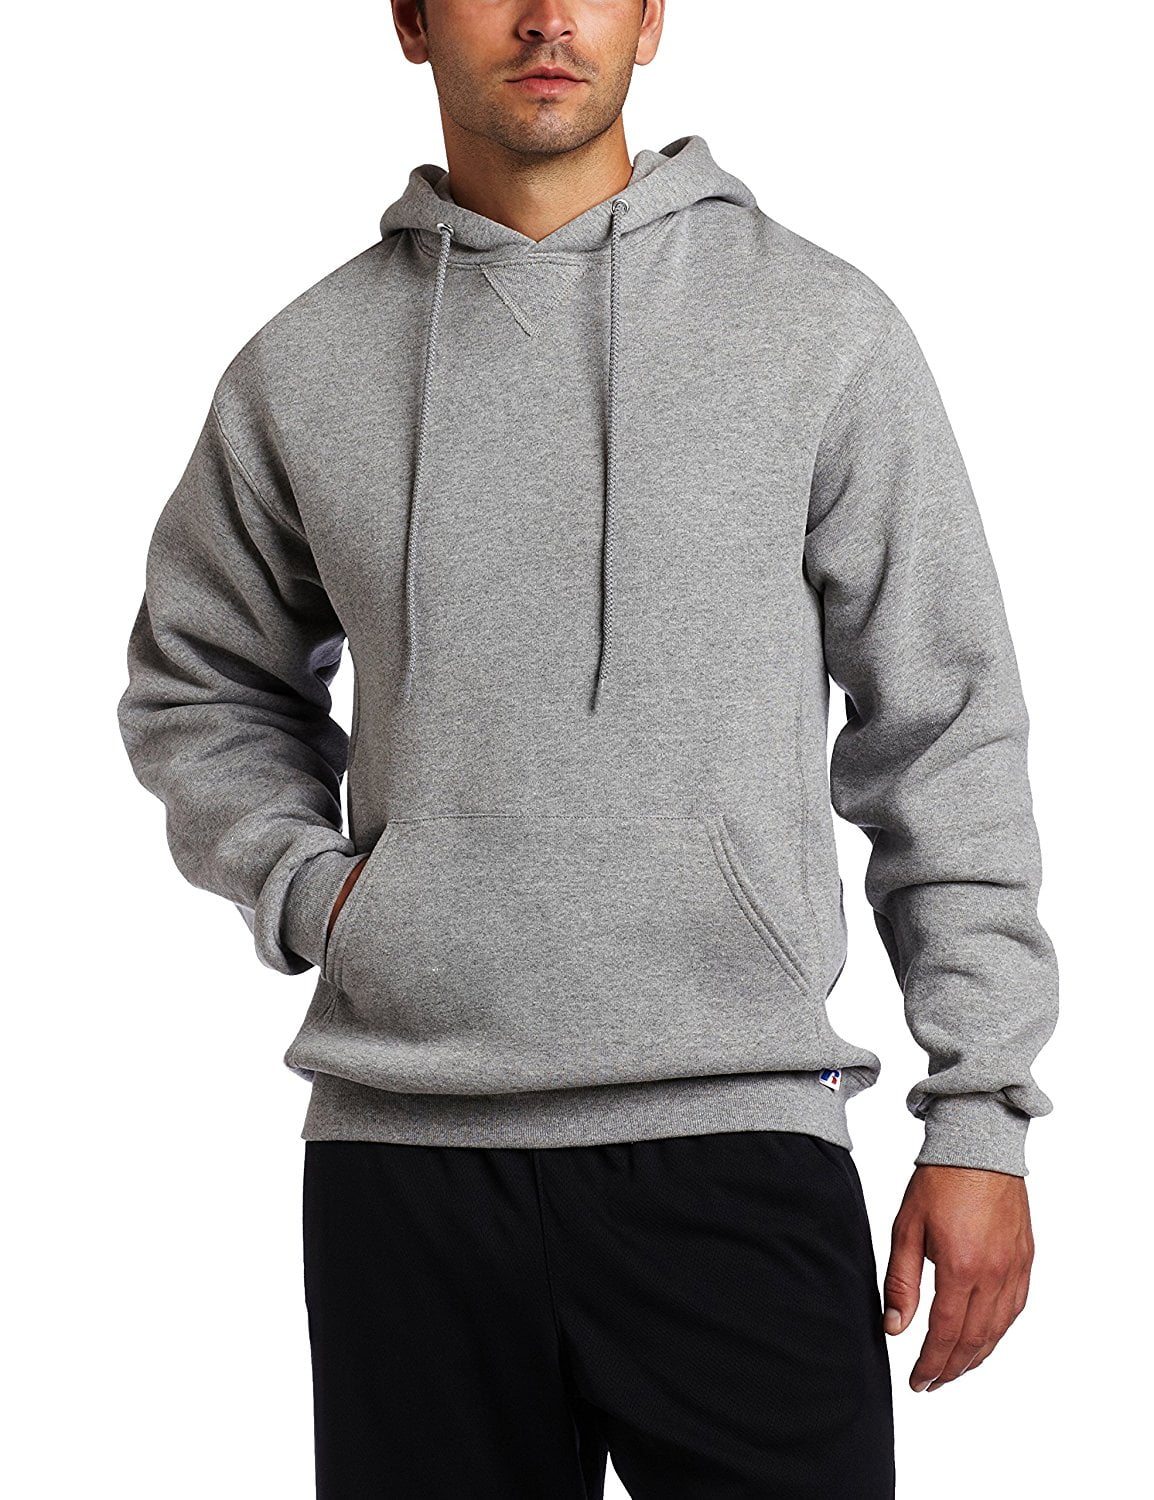 Russell Athletic - Russell Athletic - Men's Dri Power Hooded Pullover Fleece Sweatshirt